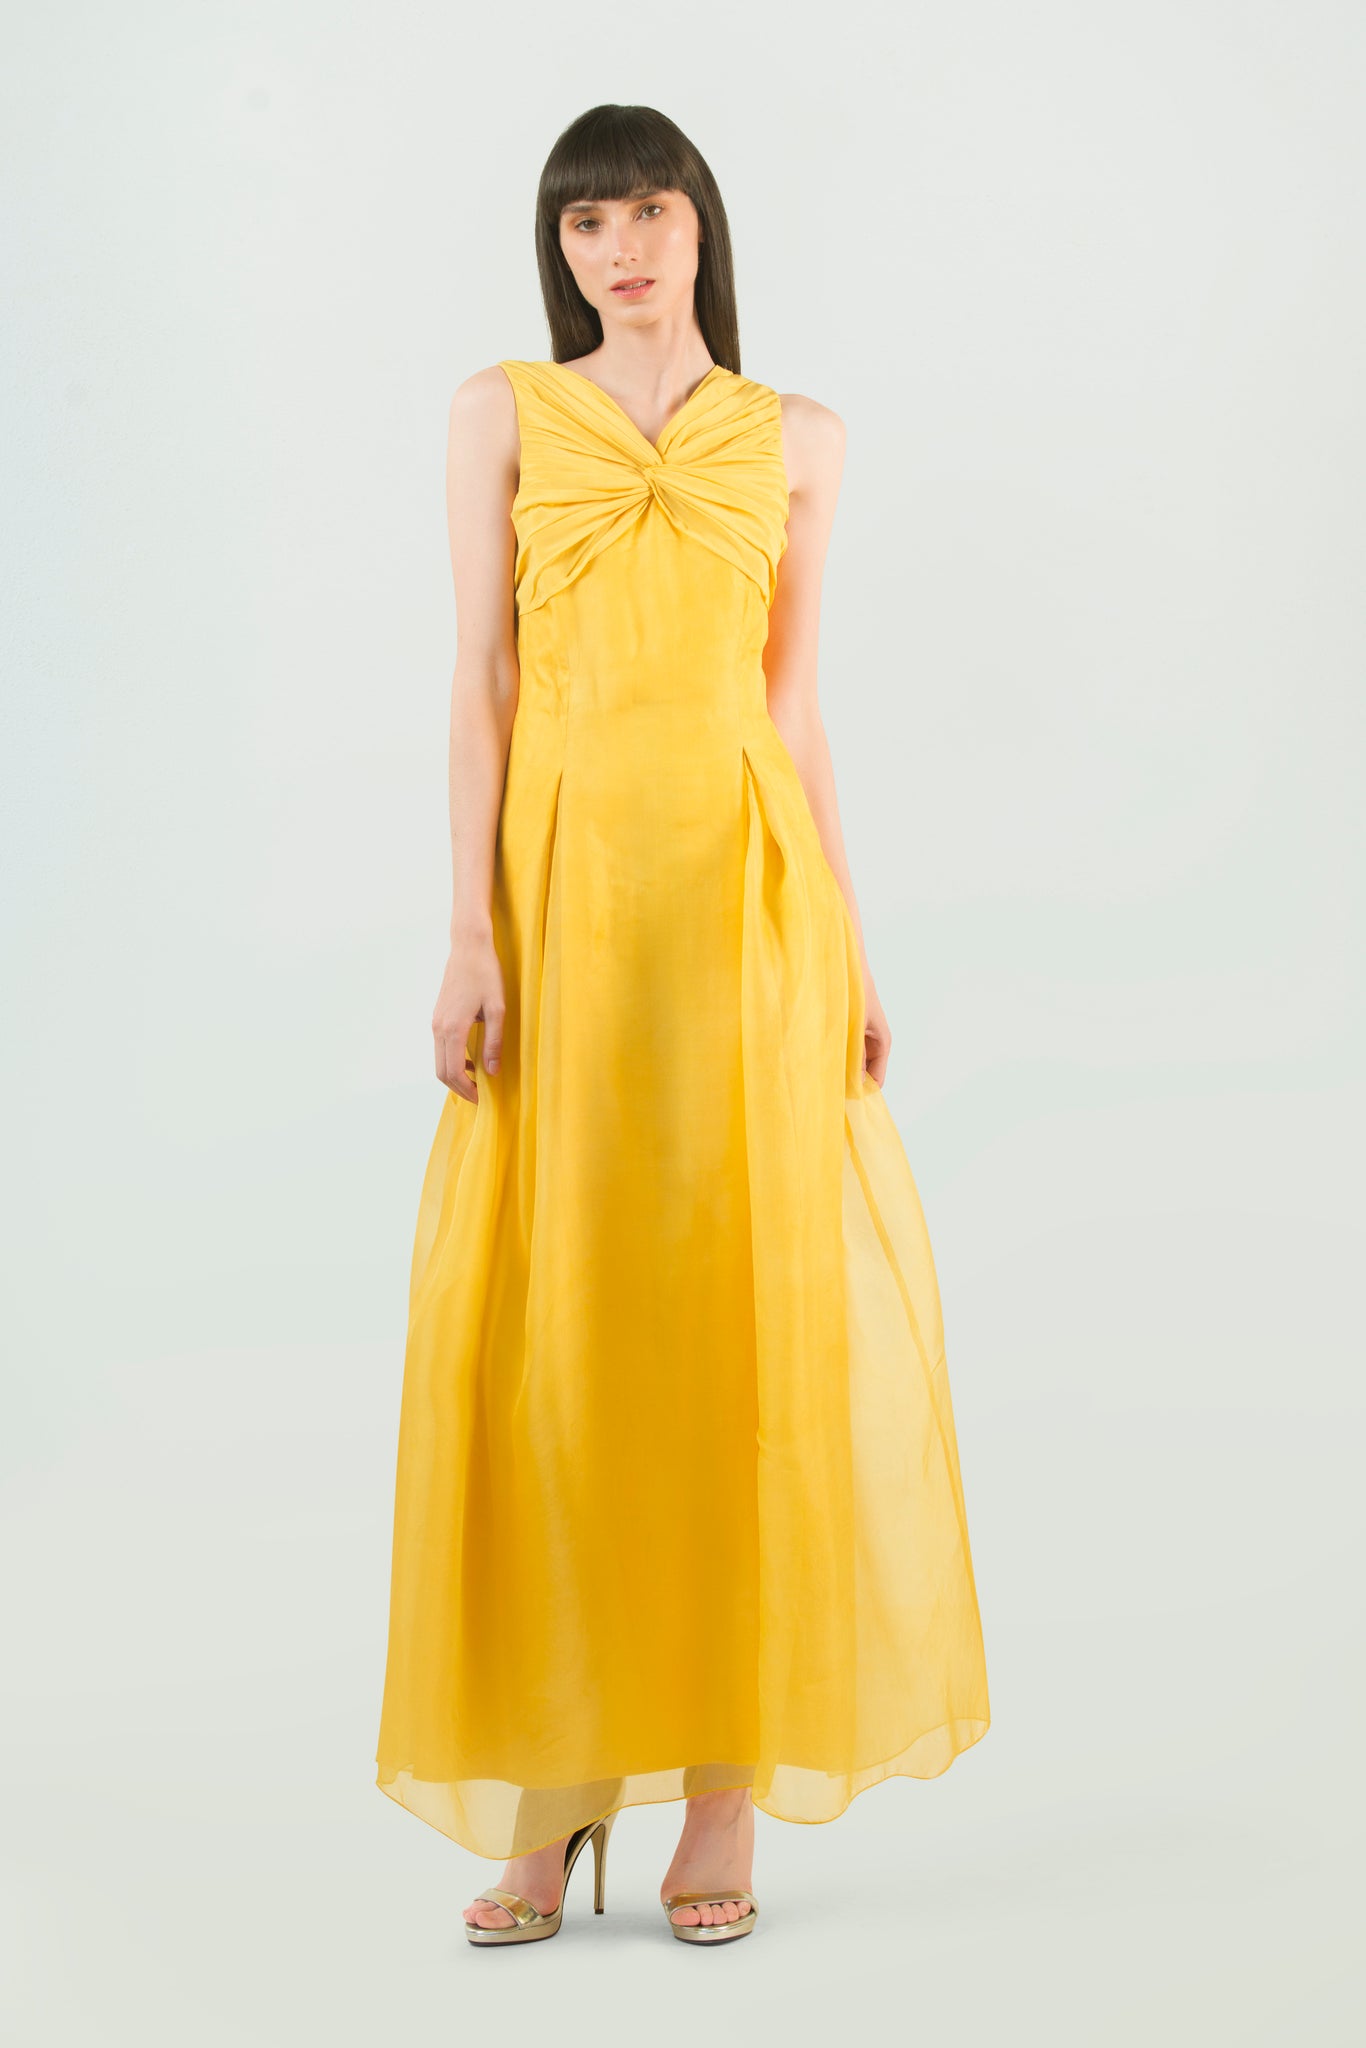 Long Yellow Cocktail Dress - AGAATI